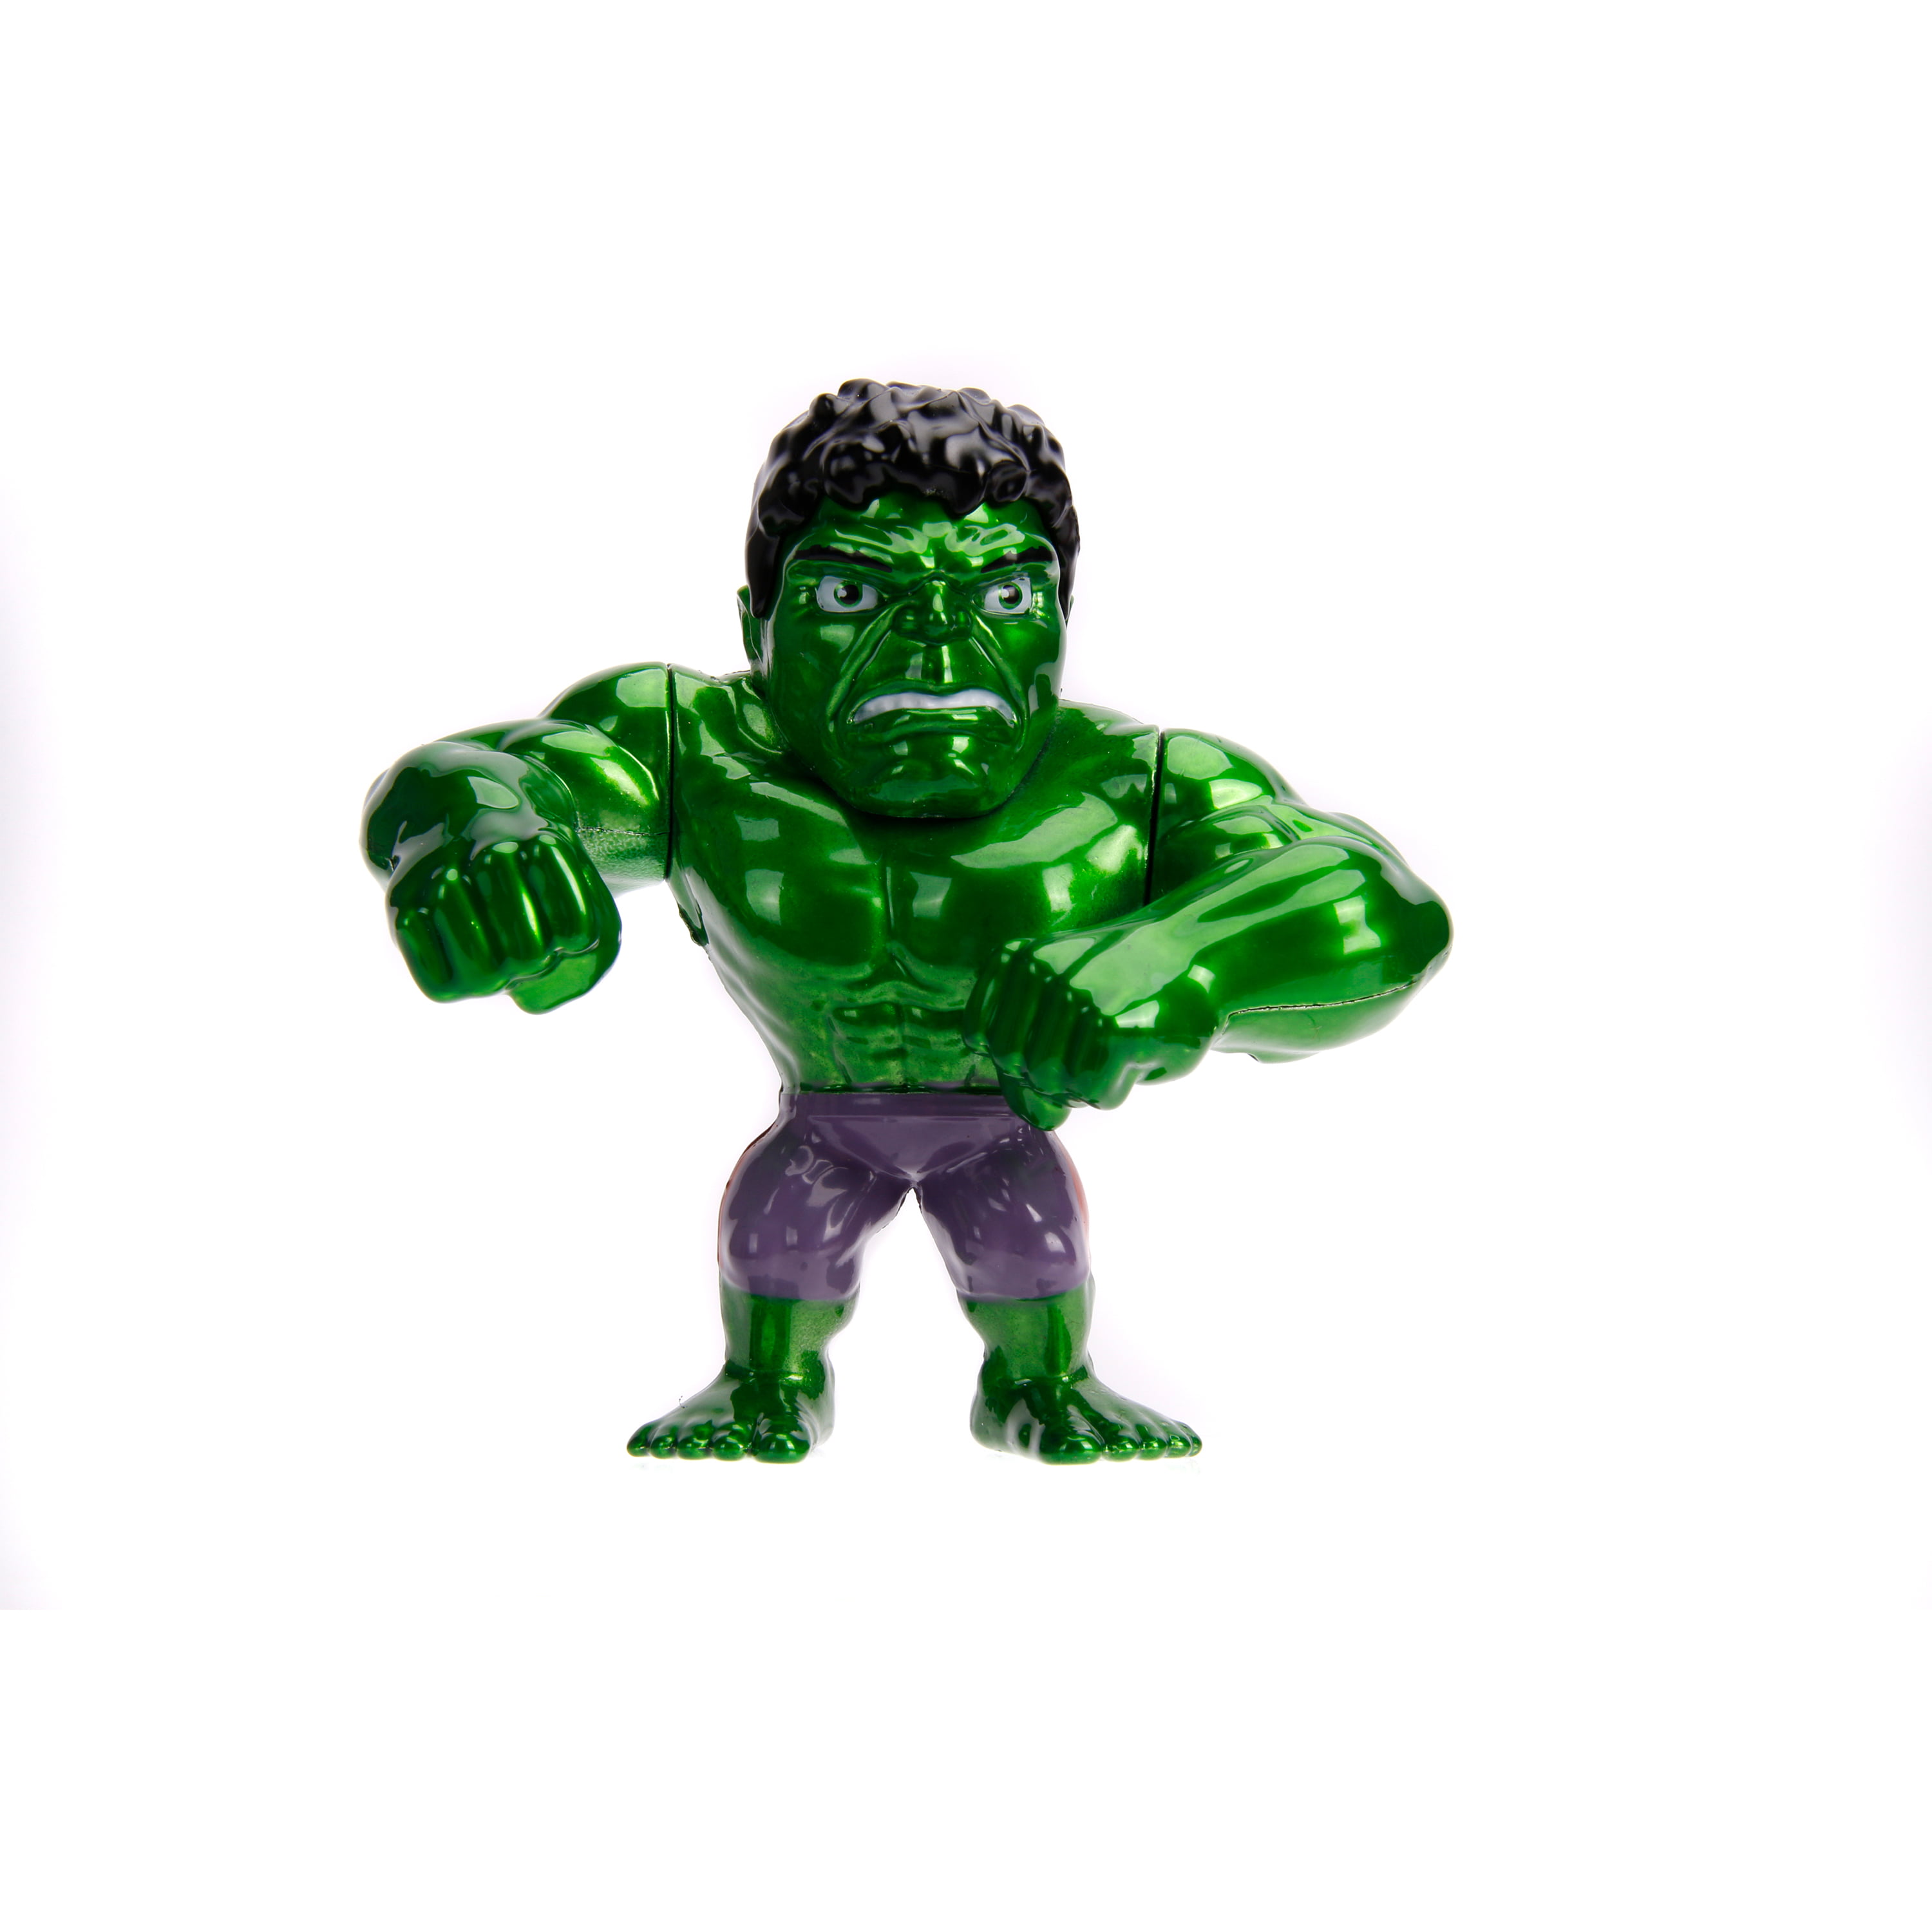 4 pcs New The Incredible Hulk Green Red legends hulk action figure 4.3" Avengers 